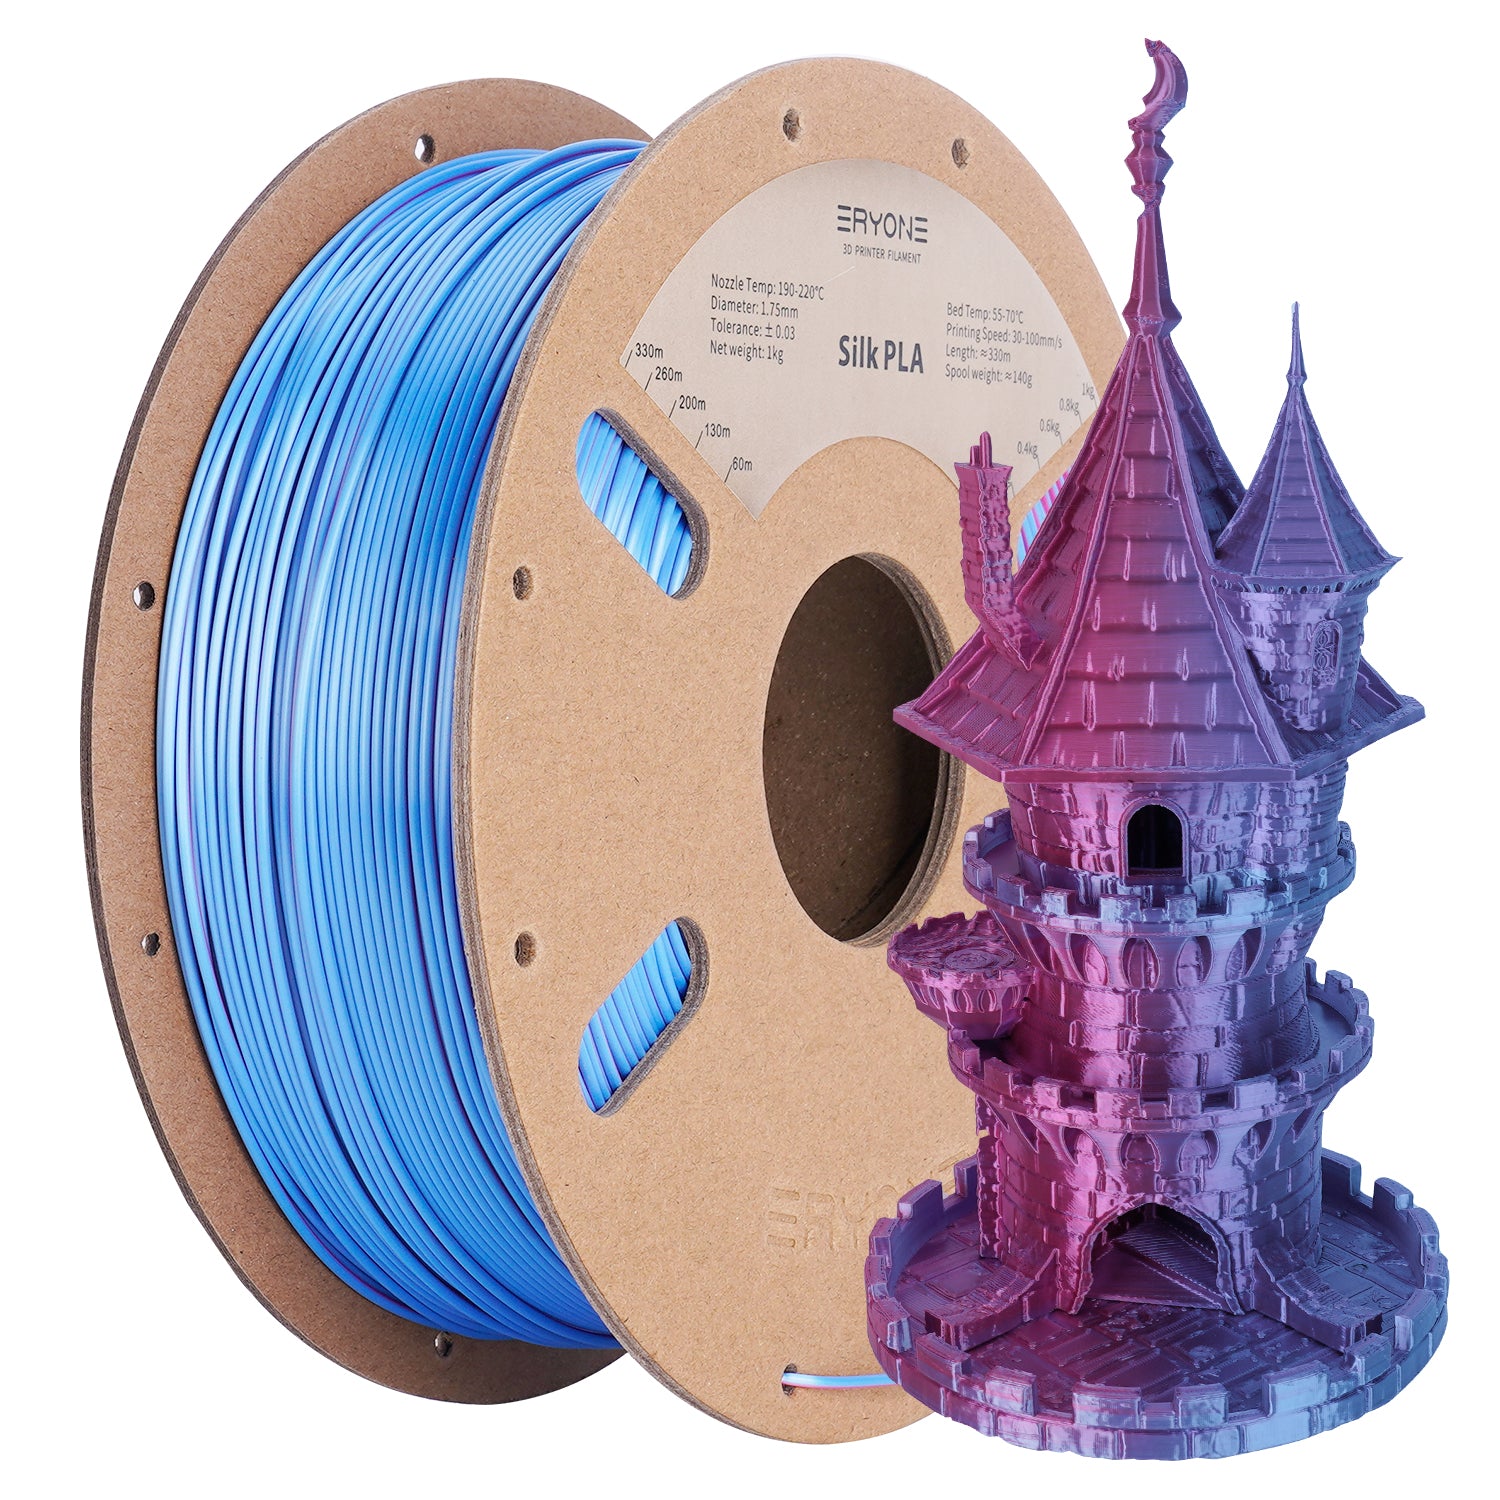 ERYONE 1kg (2.2LBS)/Spool 1.75mm Silk Dual-Color PLA Filament for 3D Printers,Accuracy +/- 0.03 mm